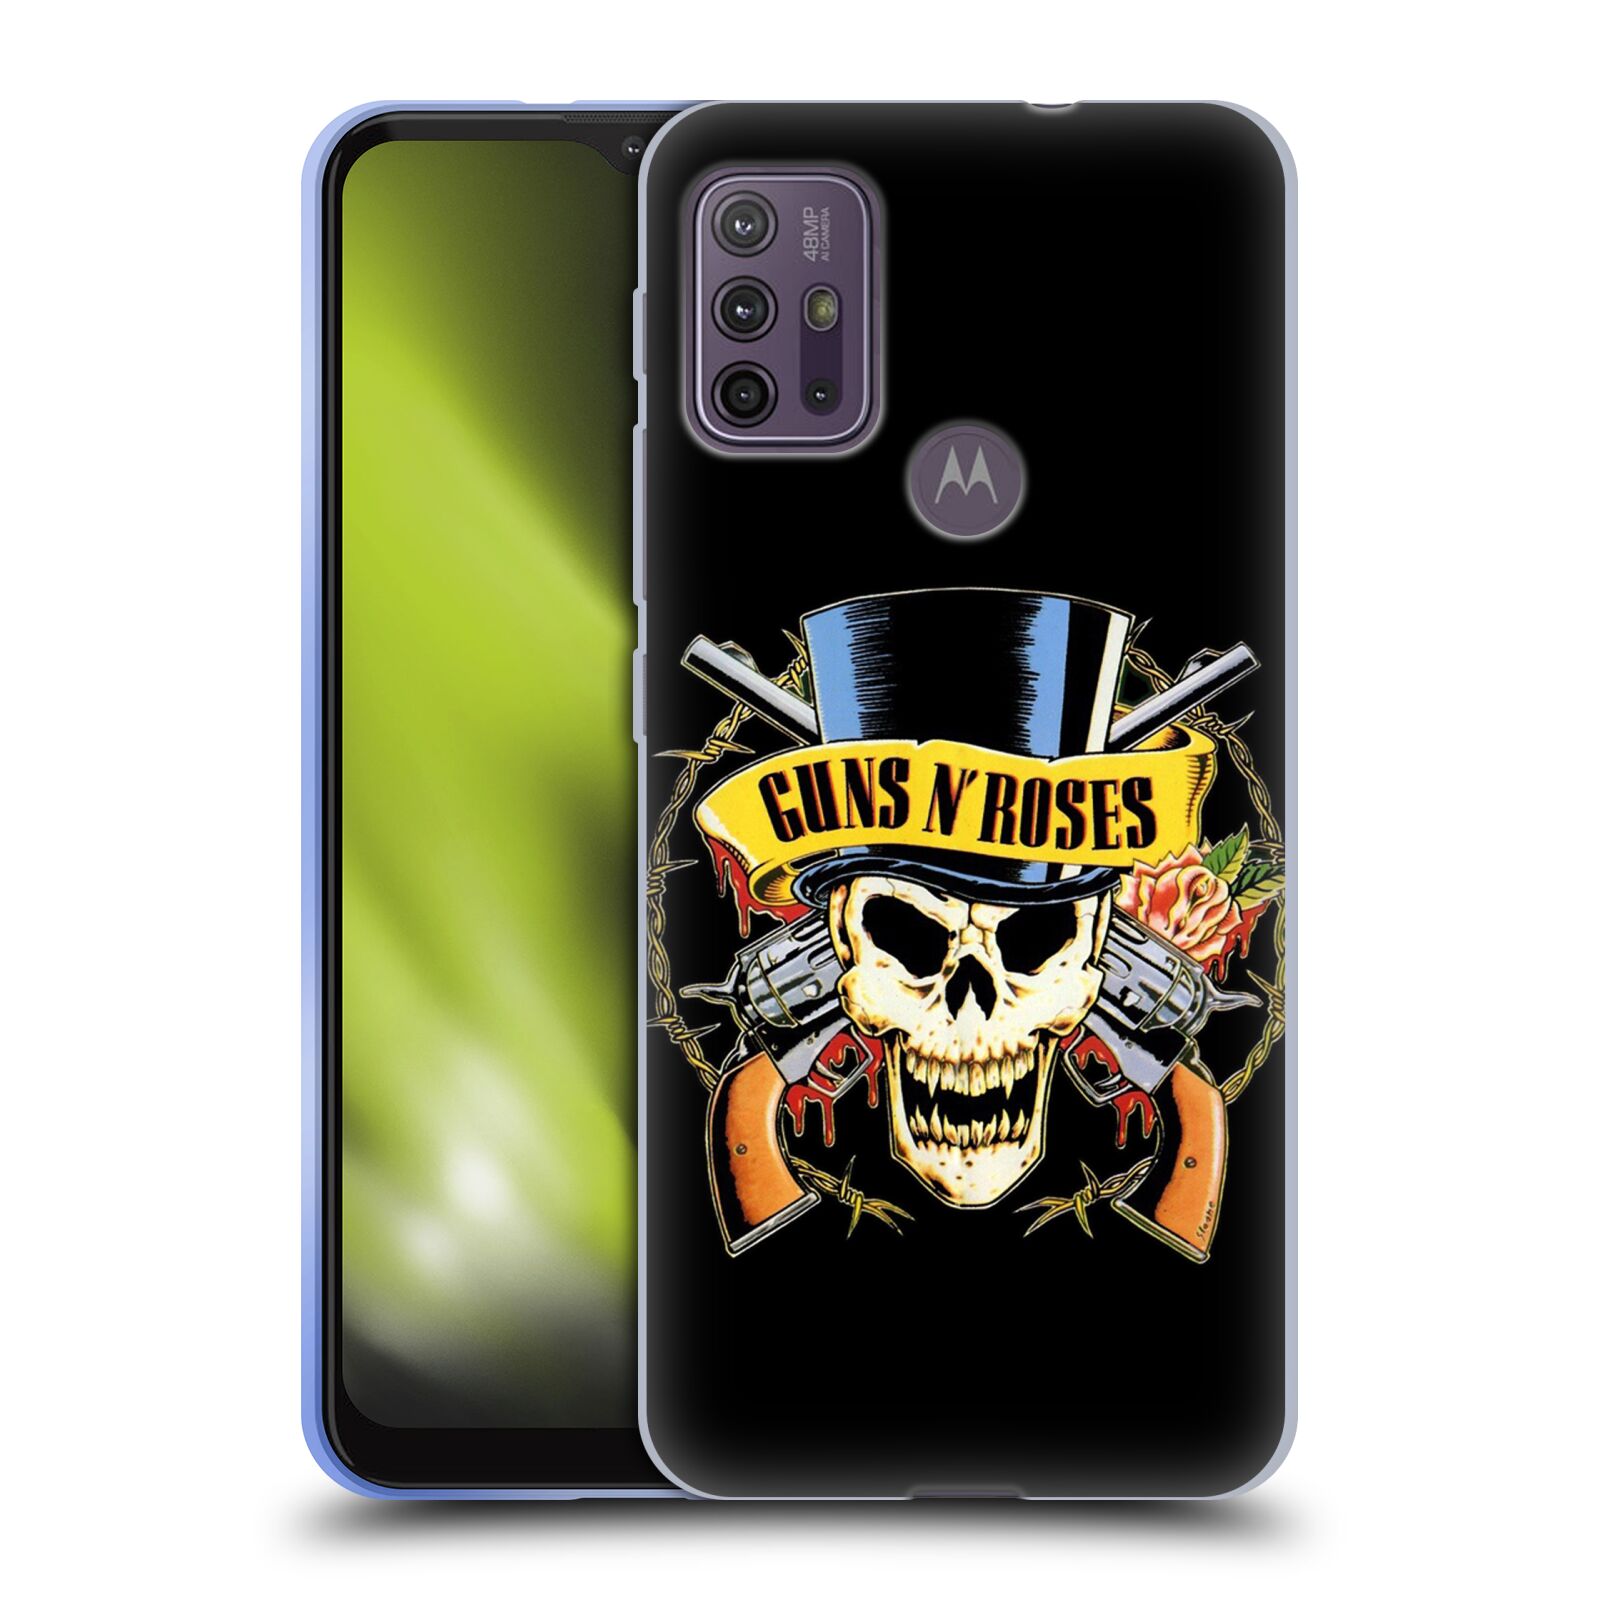 Silikonové pouzdro na mobil Motorola Moto G10 / G30 - Head Case - Guns N' Roses - Lebka